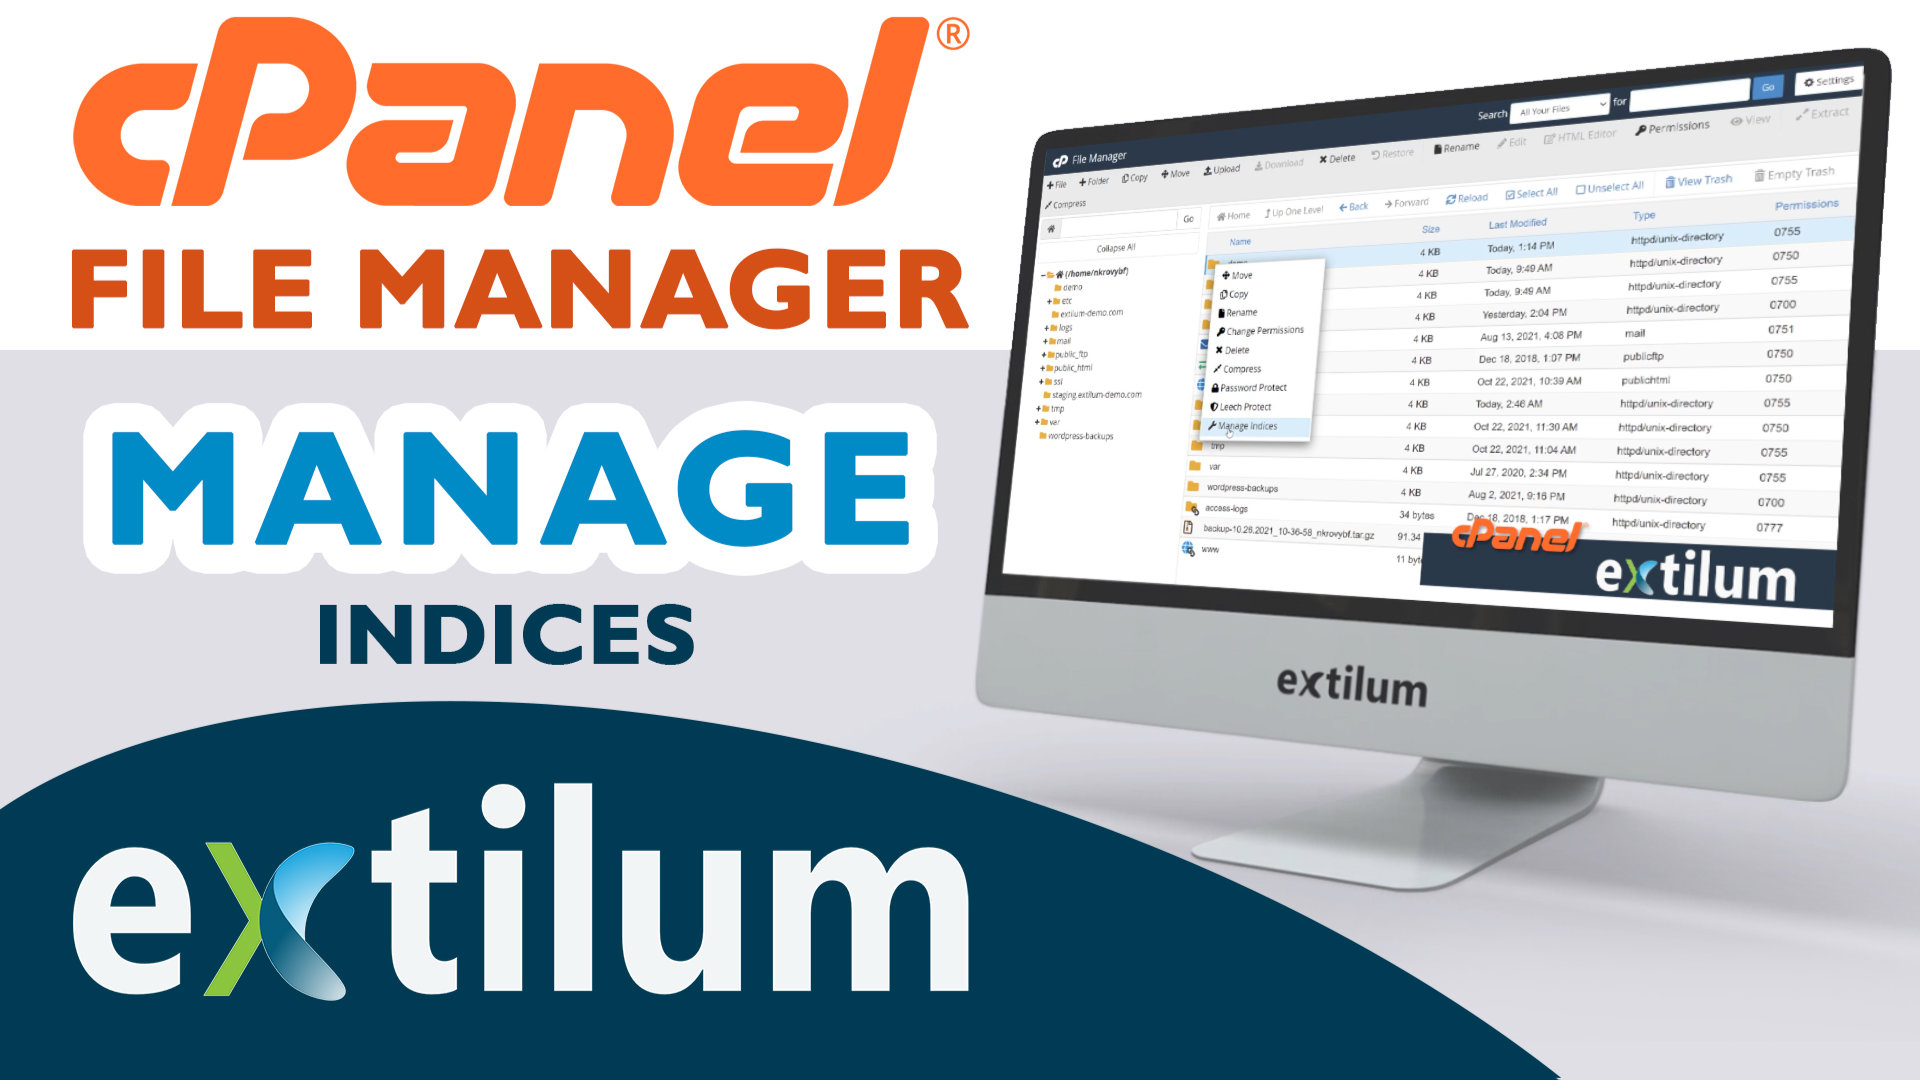 Extilum cpanel - file manager - manage incicies